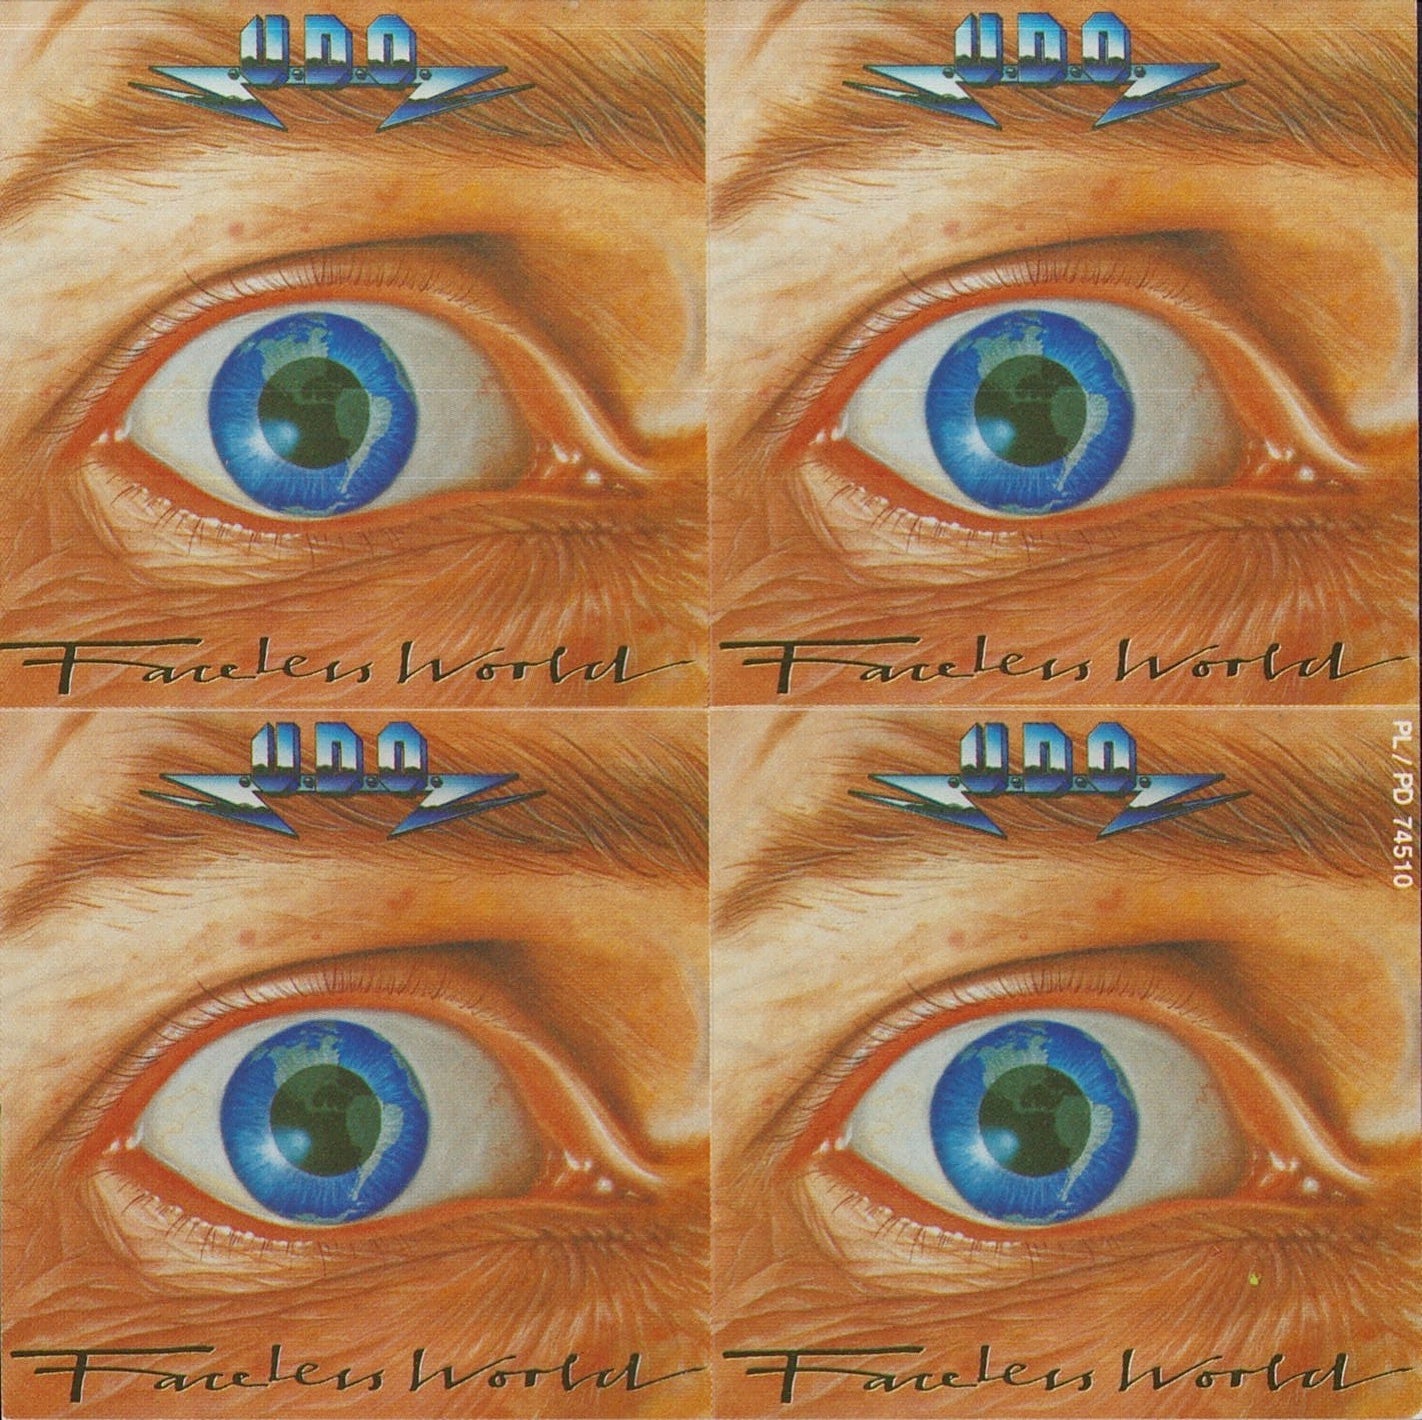 U.D.O. - Faceless World Vinyl LP